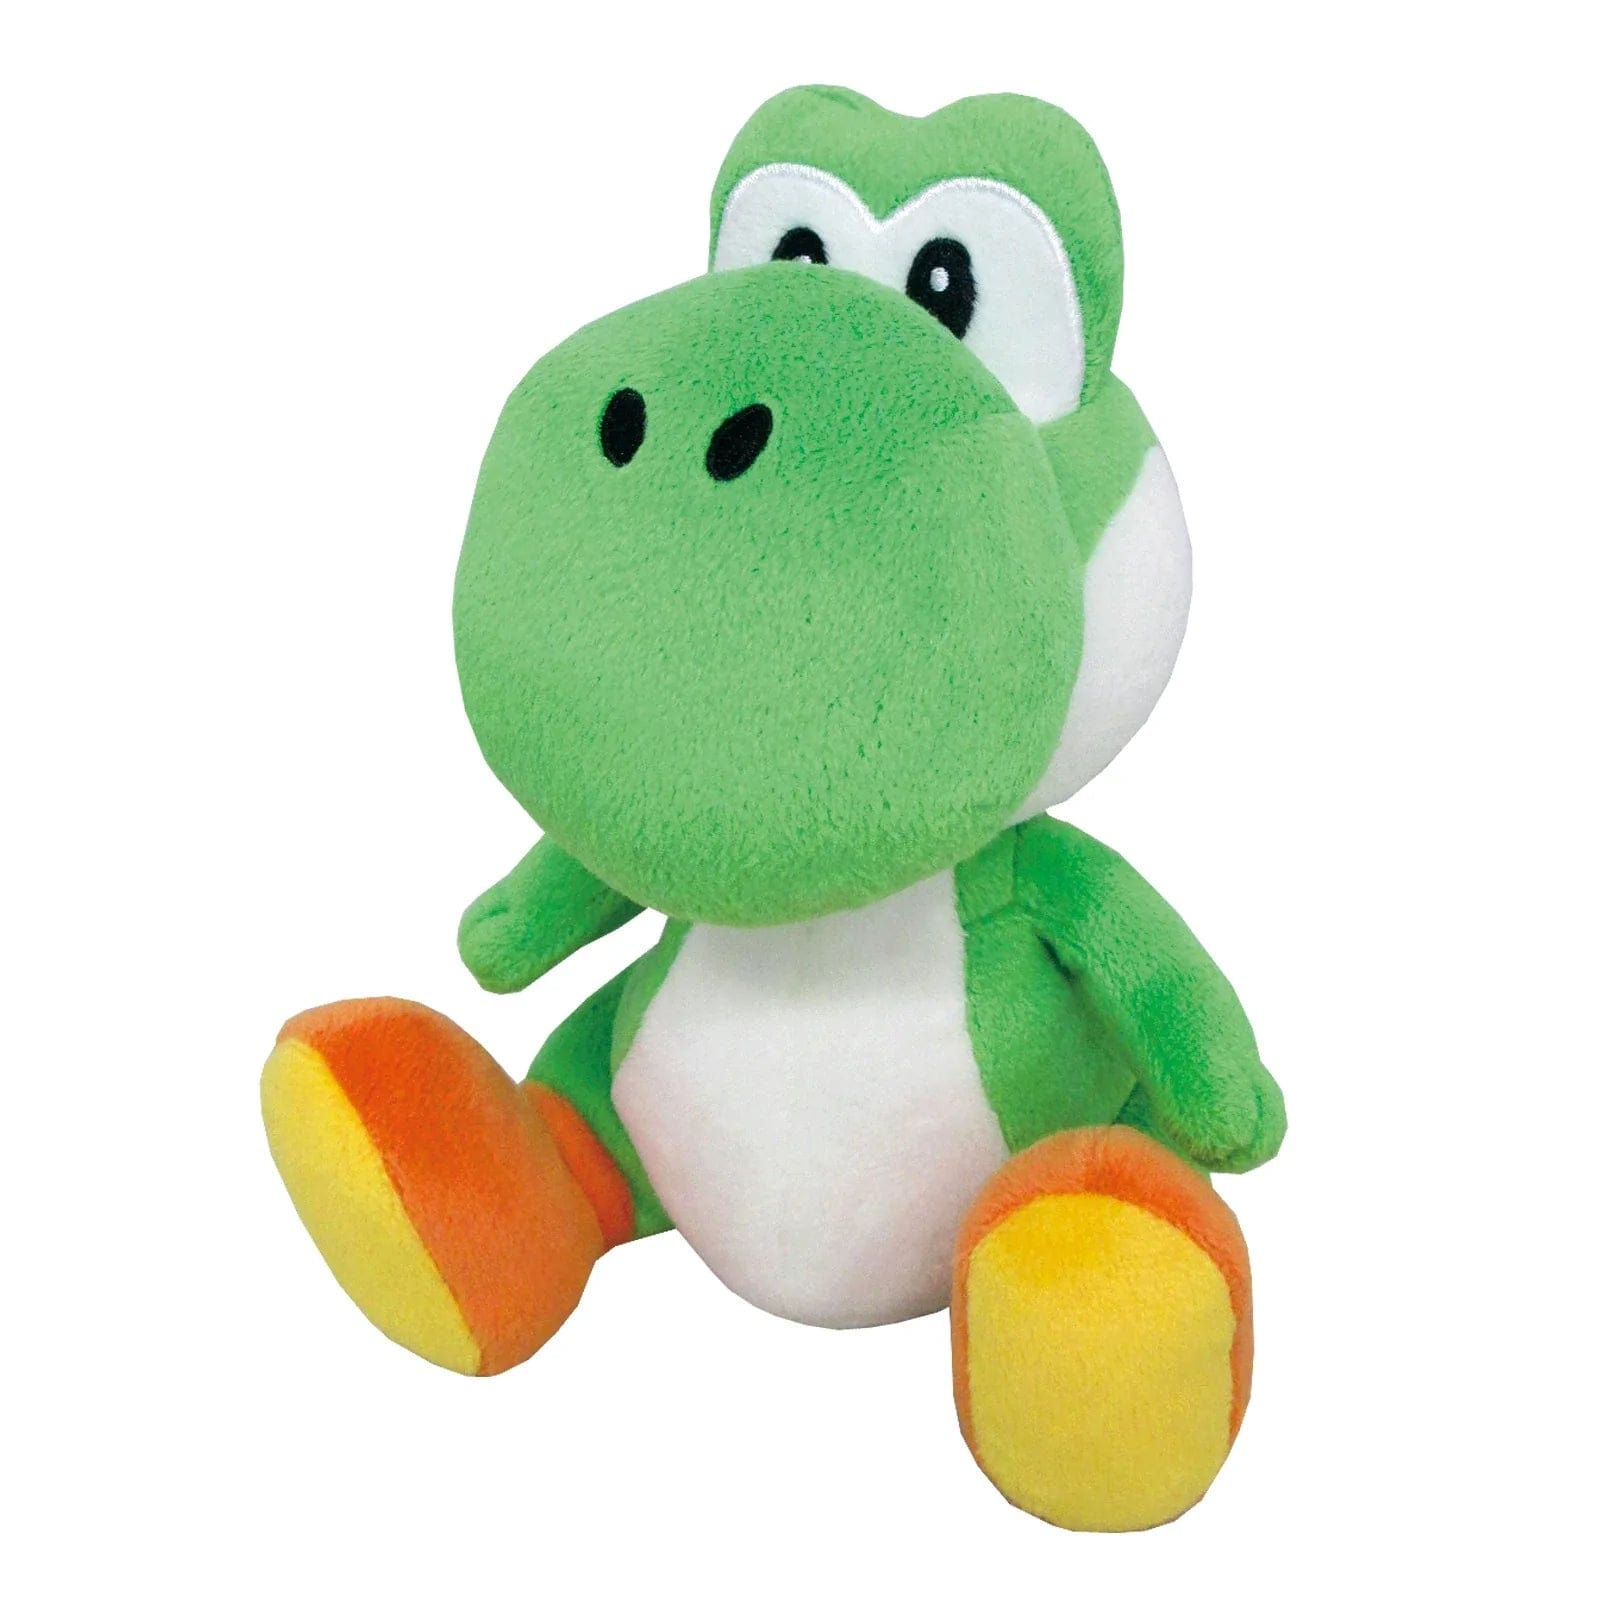 Little Buddy Super Mario All Star Yoshi - Green Yoshi Plush 8"